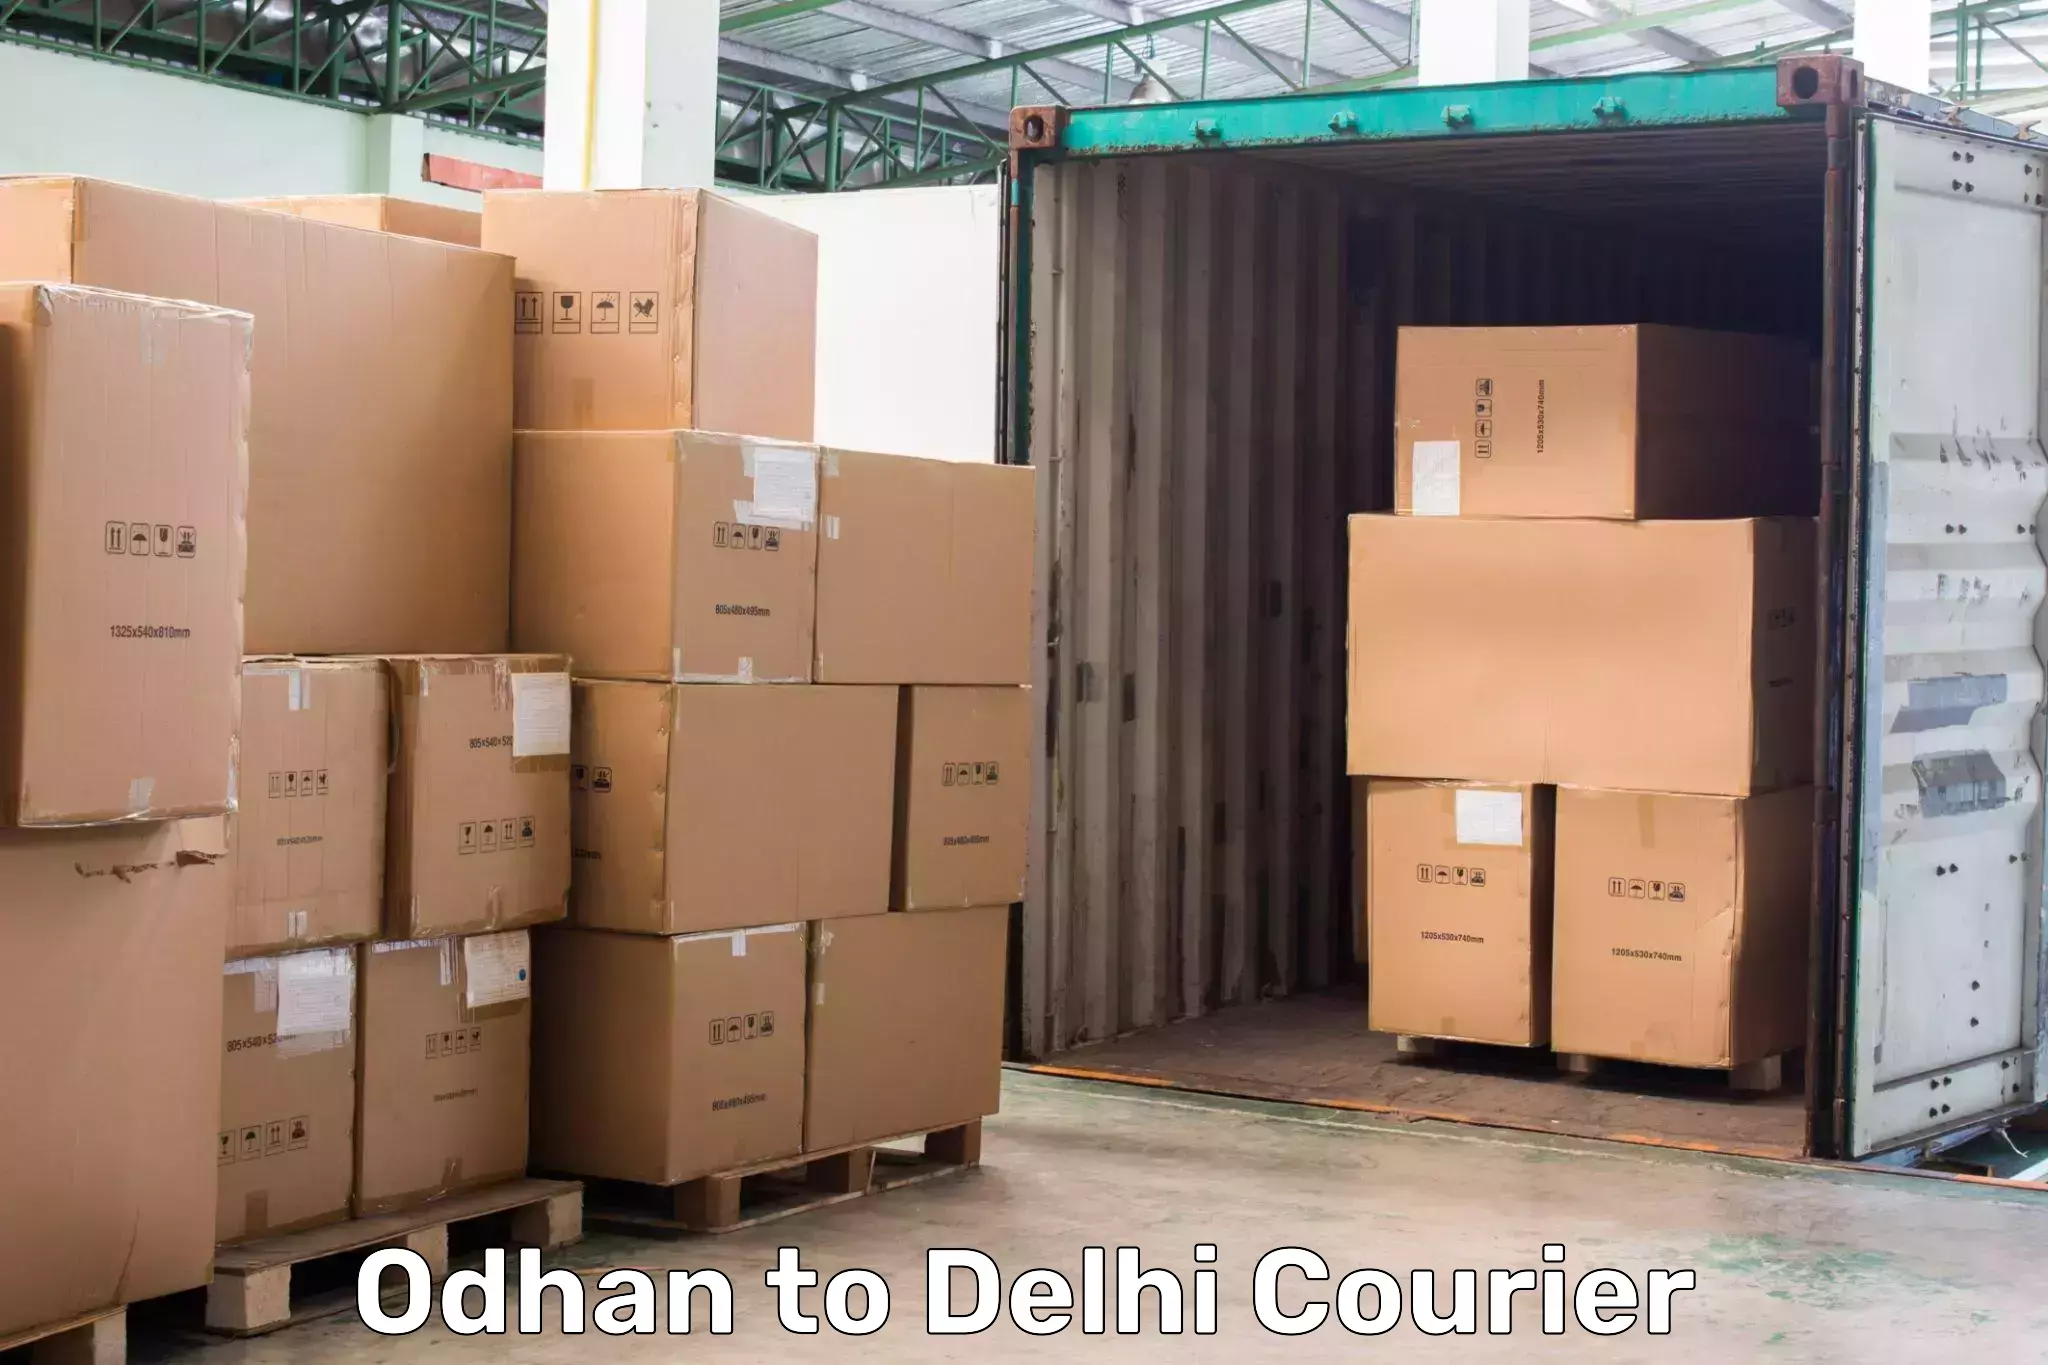 Courier service comparison Odhan to University of Delhi